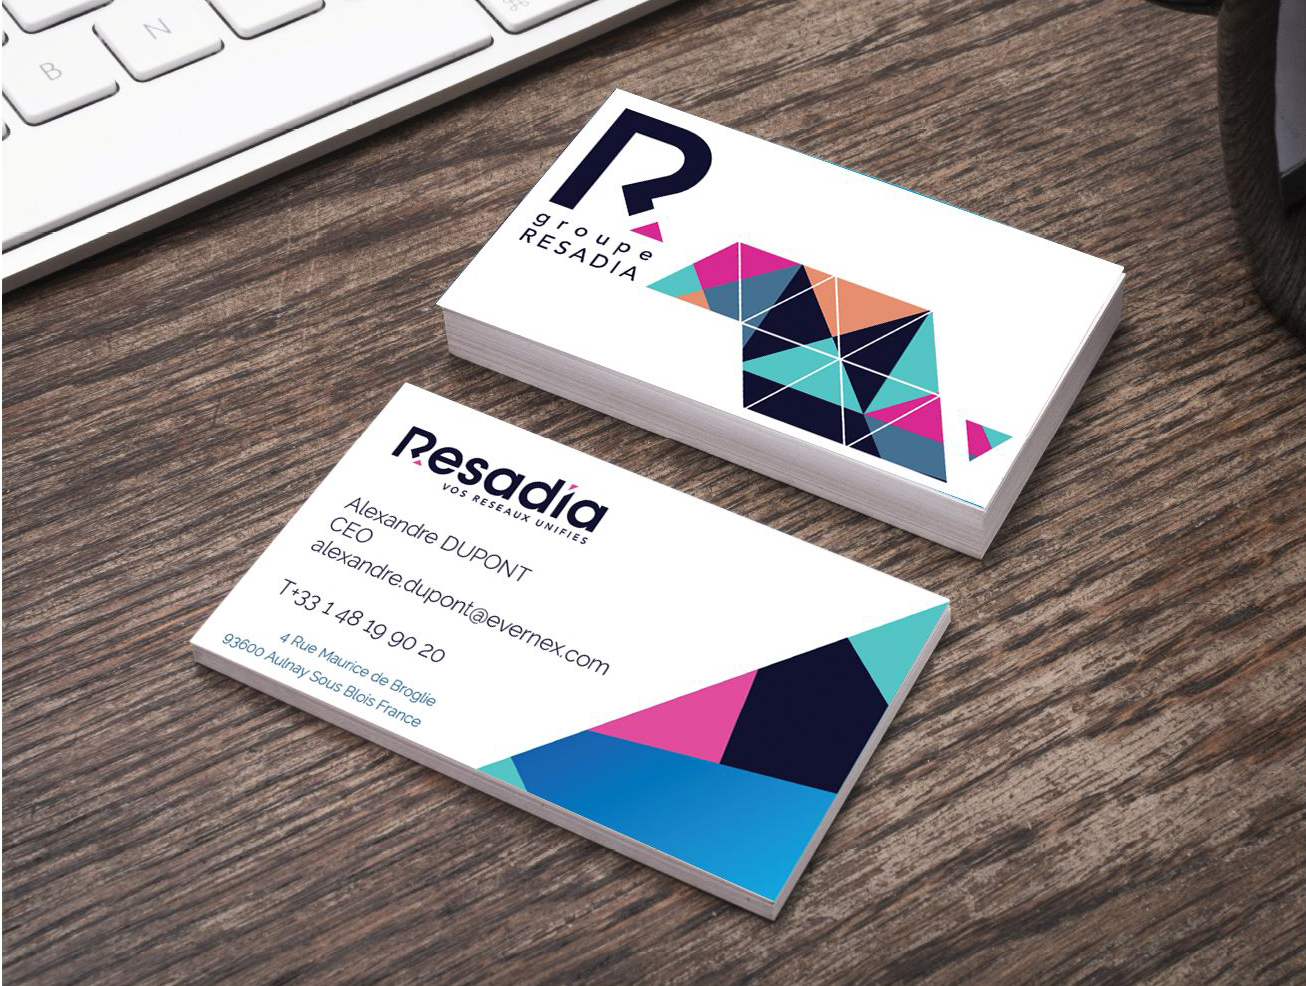 Resadia Branding by proffice.agency